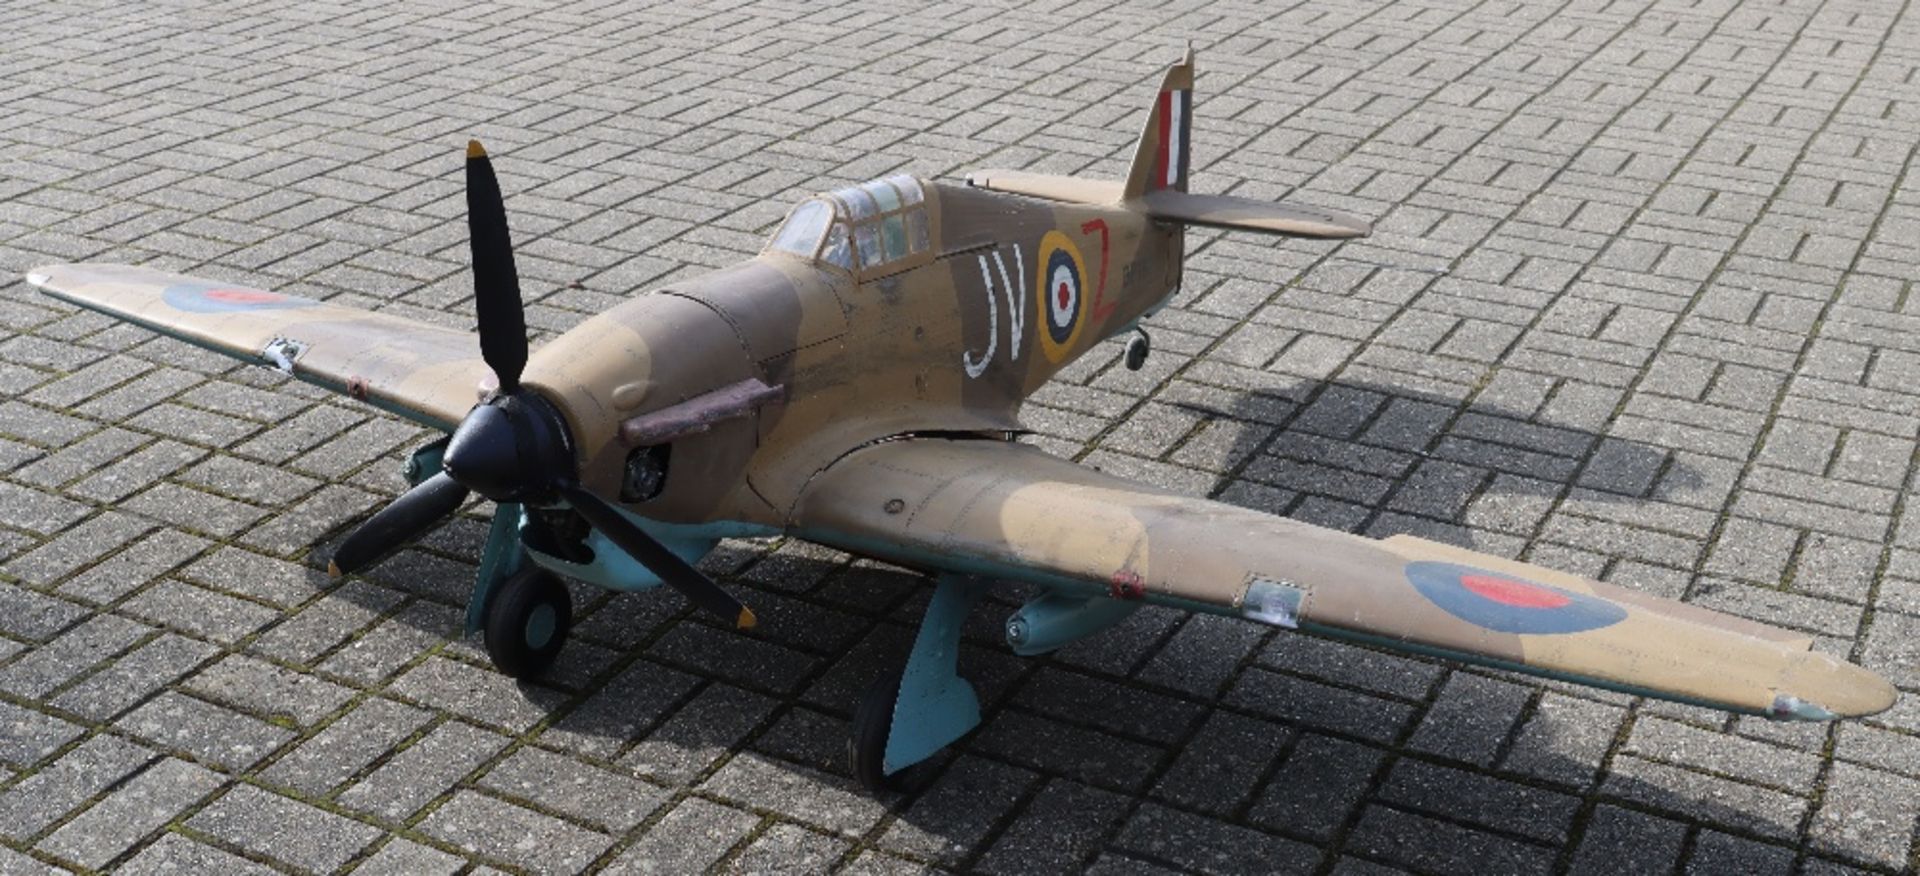 Model of a WW2 RAF Hurricane Fighter Plane